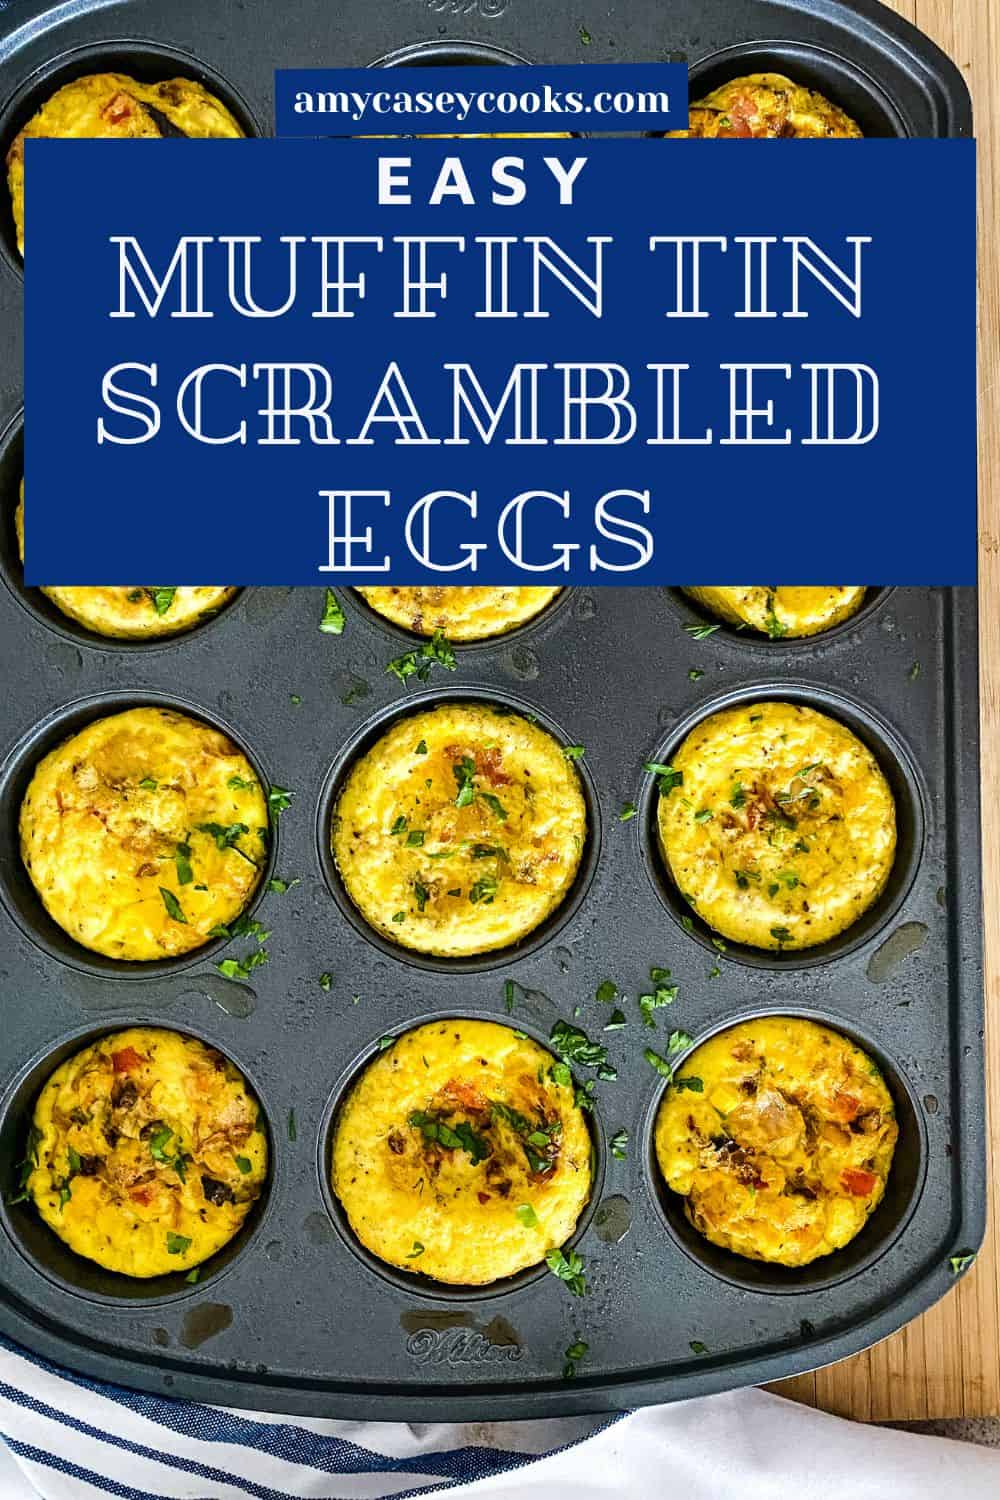 muffin tin eggs in a pan.